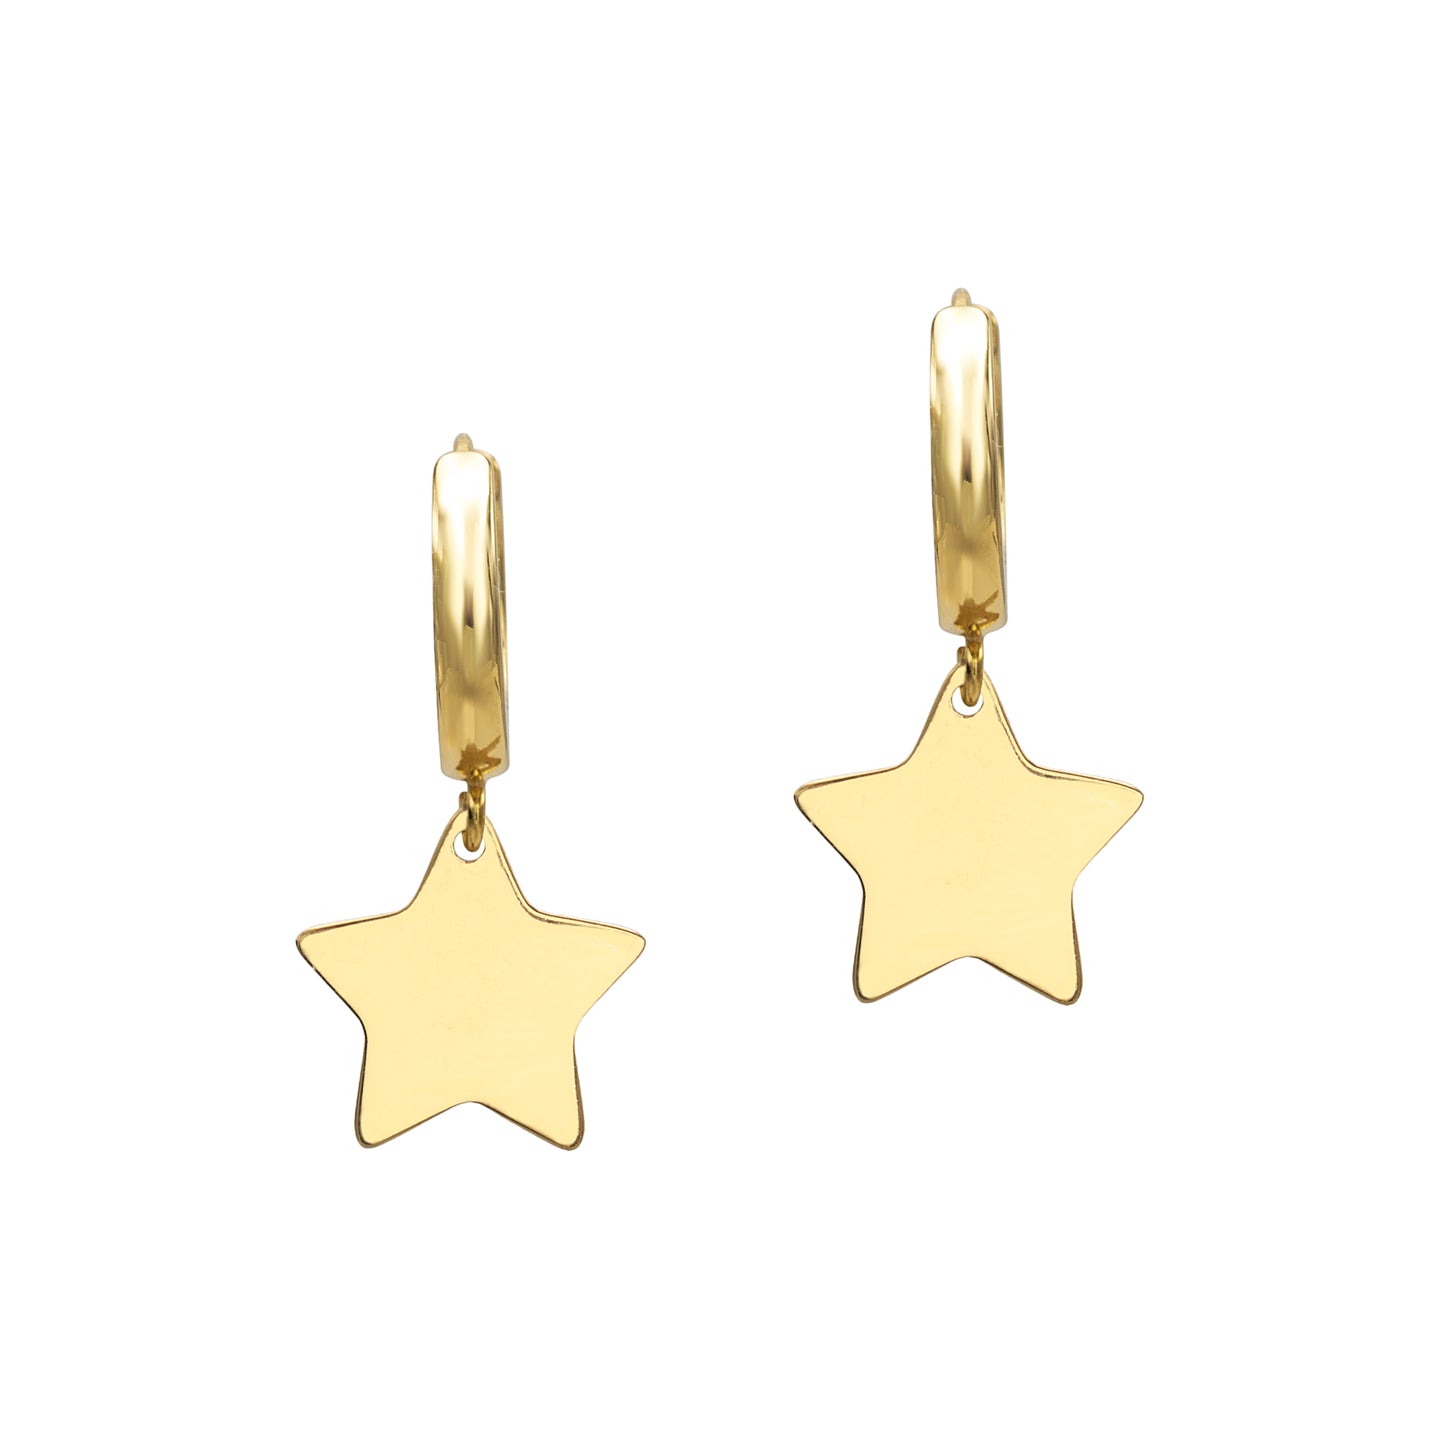 Cercei argint cu stea Rio Star - placati aur galben 18K